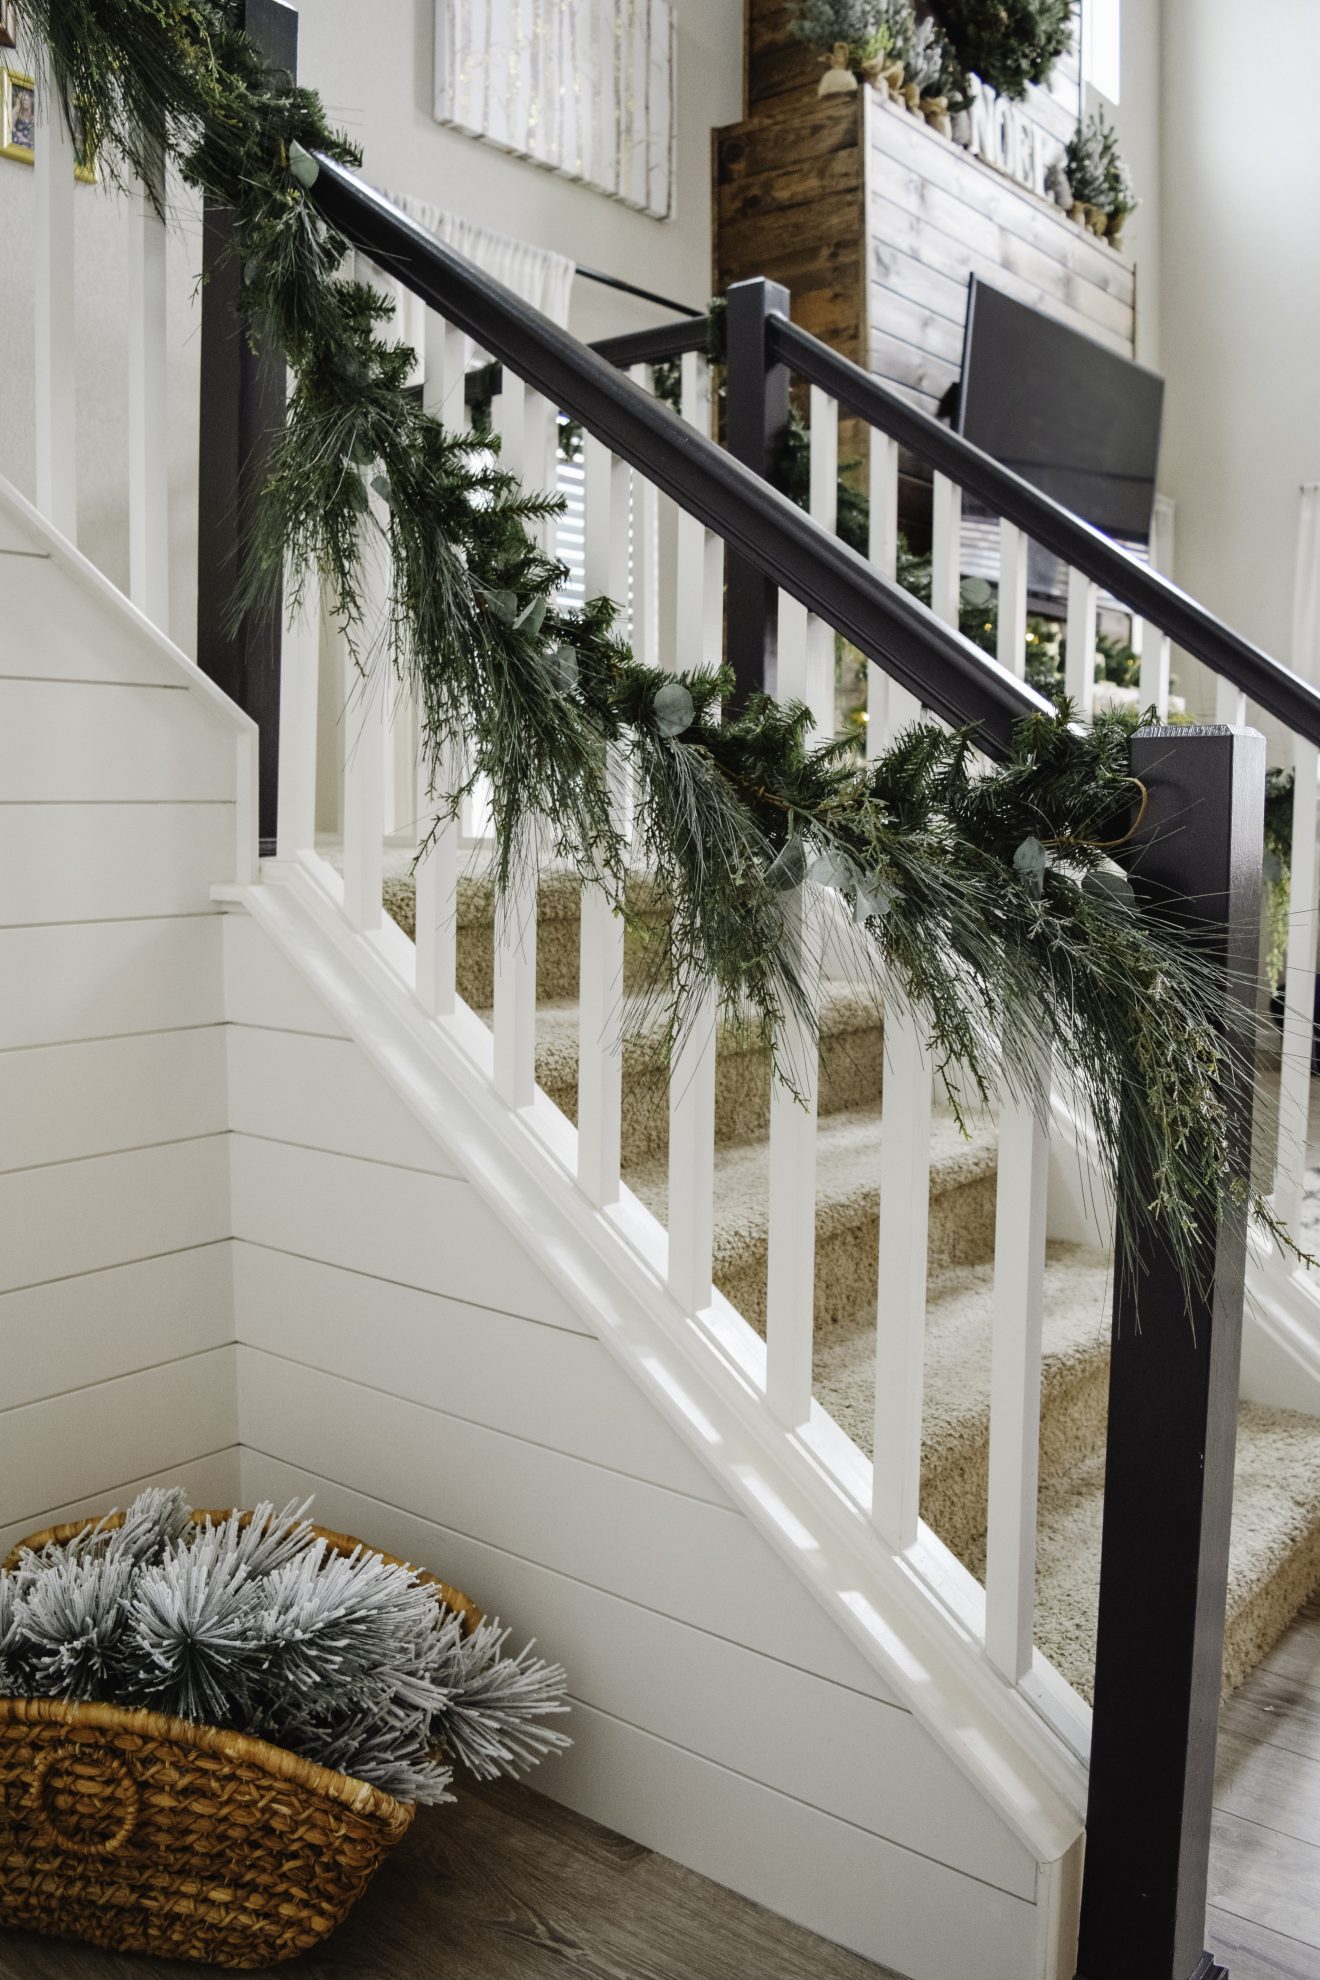 Black and white stair railing with wispy greenery garland